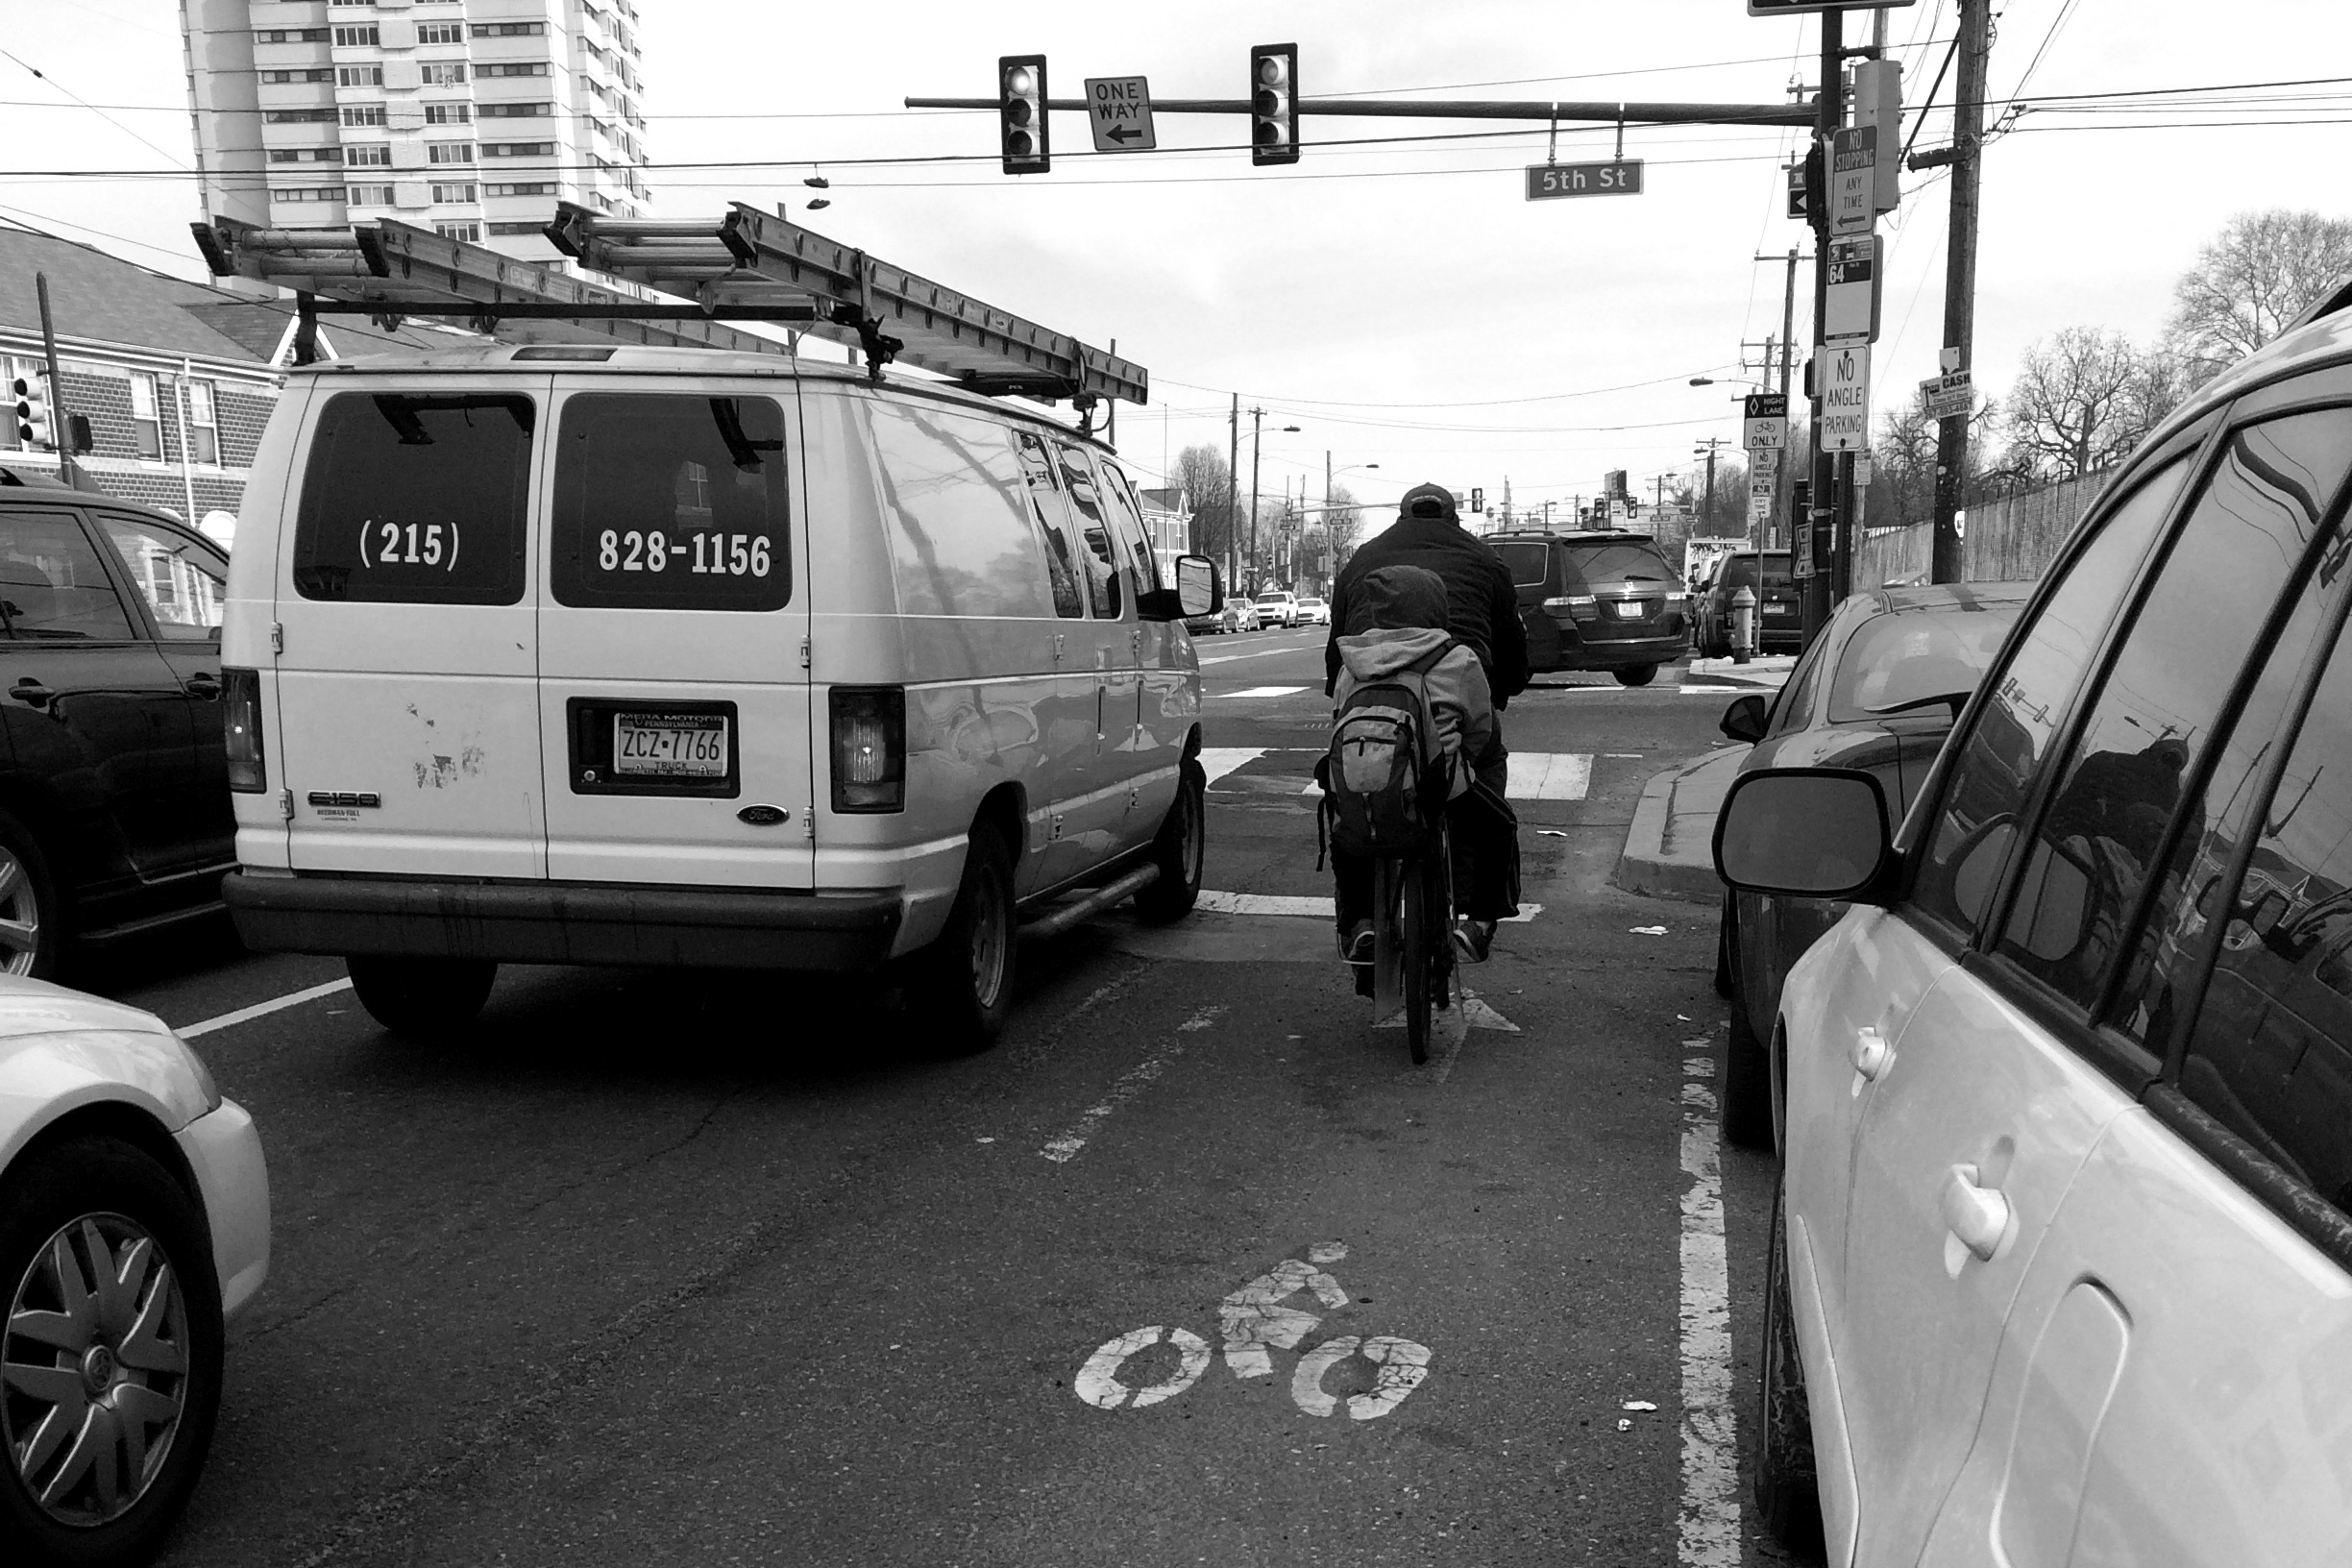 Washington Ave - where bike lanes have worn away 